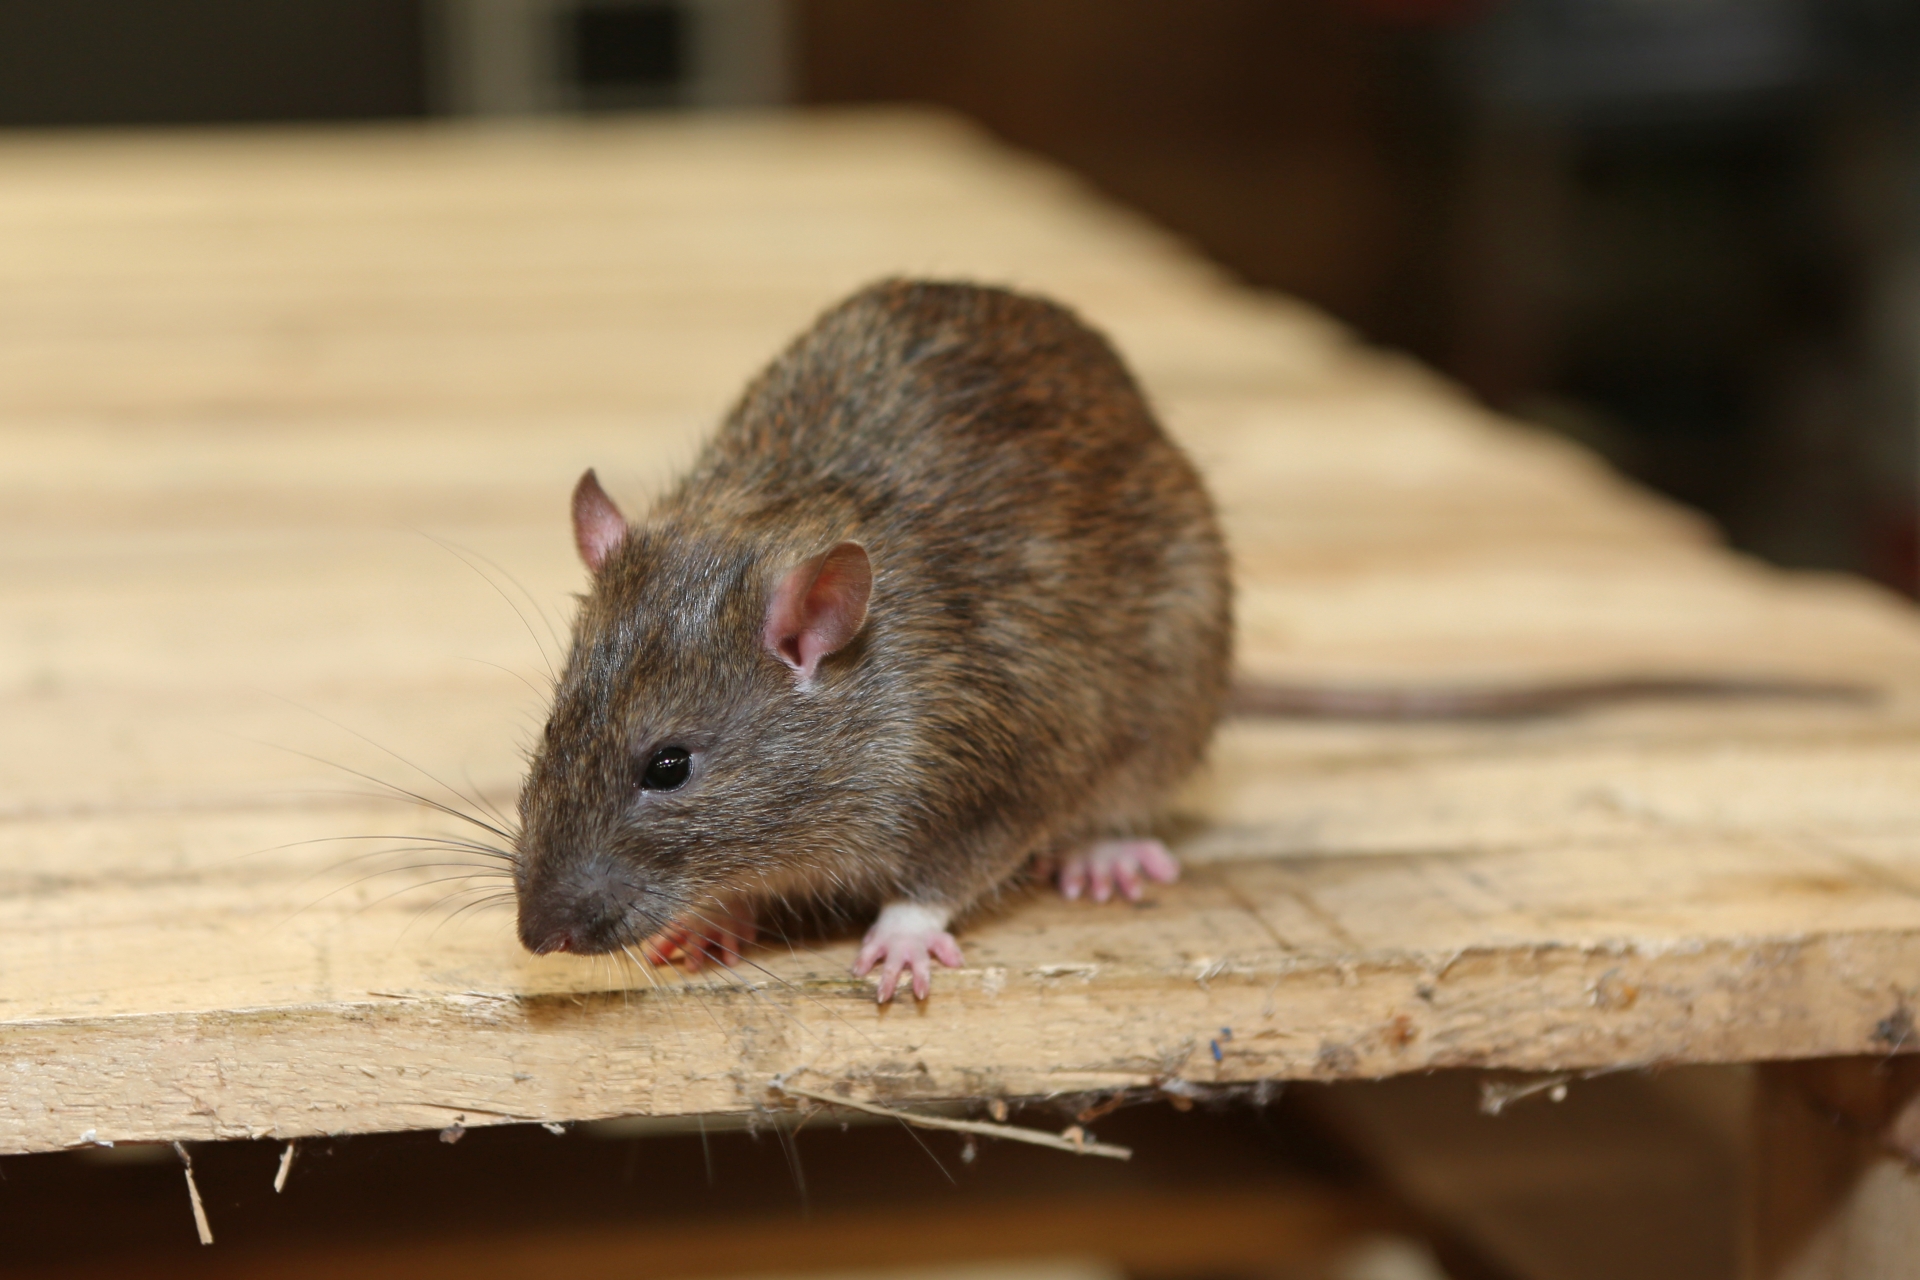 Rat extermination, Pest Control in Plaistow, E13. Call Now 020 8166 9746